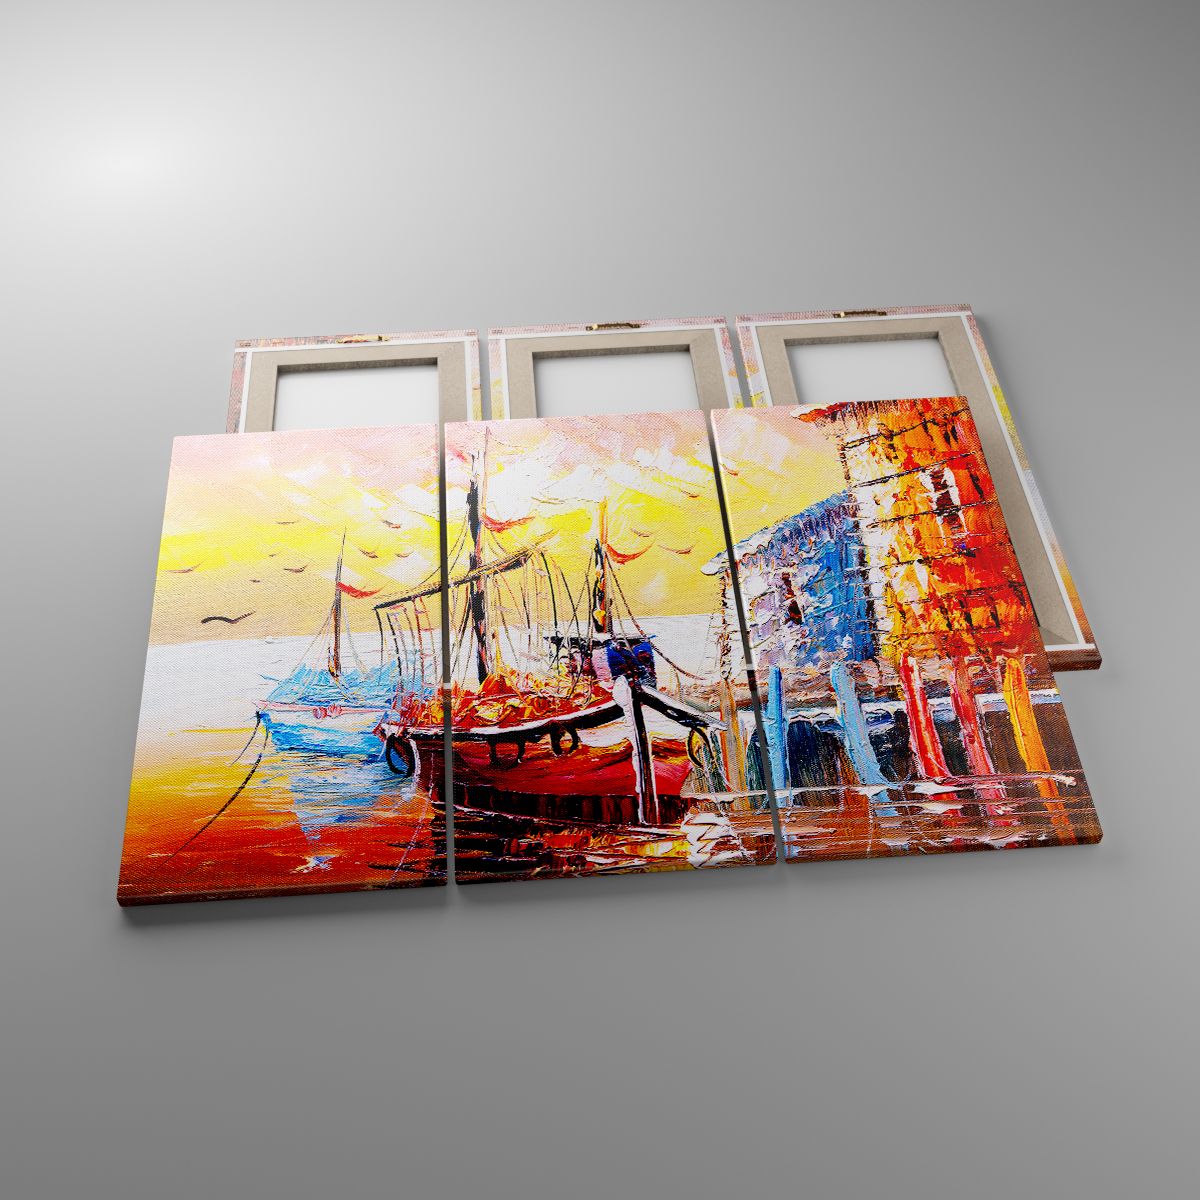 Leinwandbild Landschaft, Leinwandbild Fischereihafen, Leinwandbild Boote, Leinwandbild Die Vögel, Leinwandbild Kunst